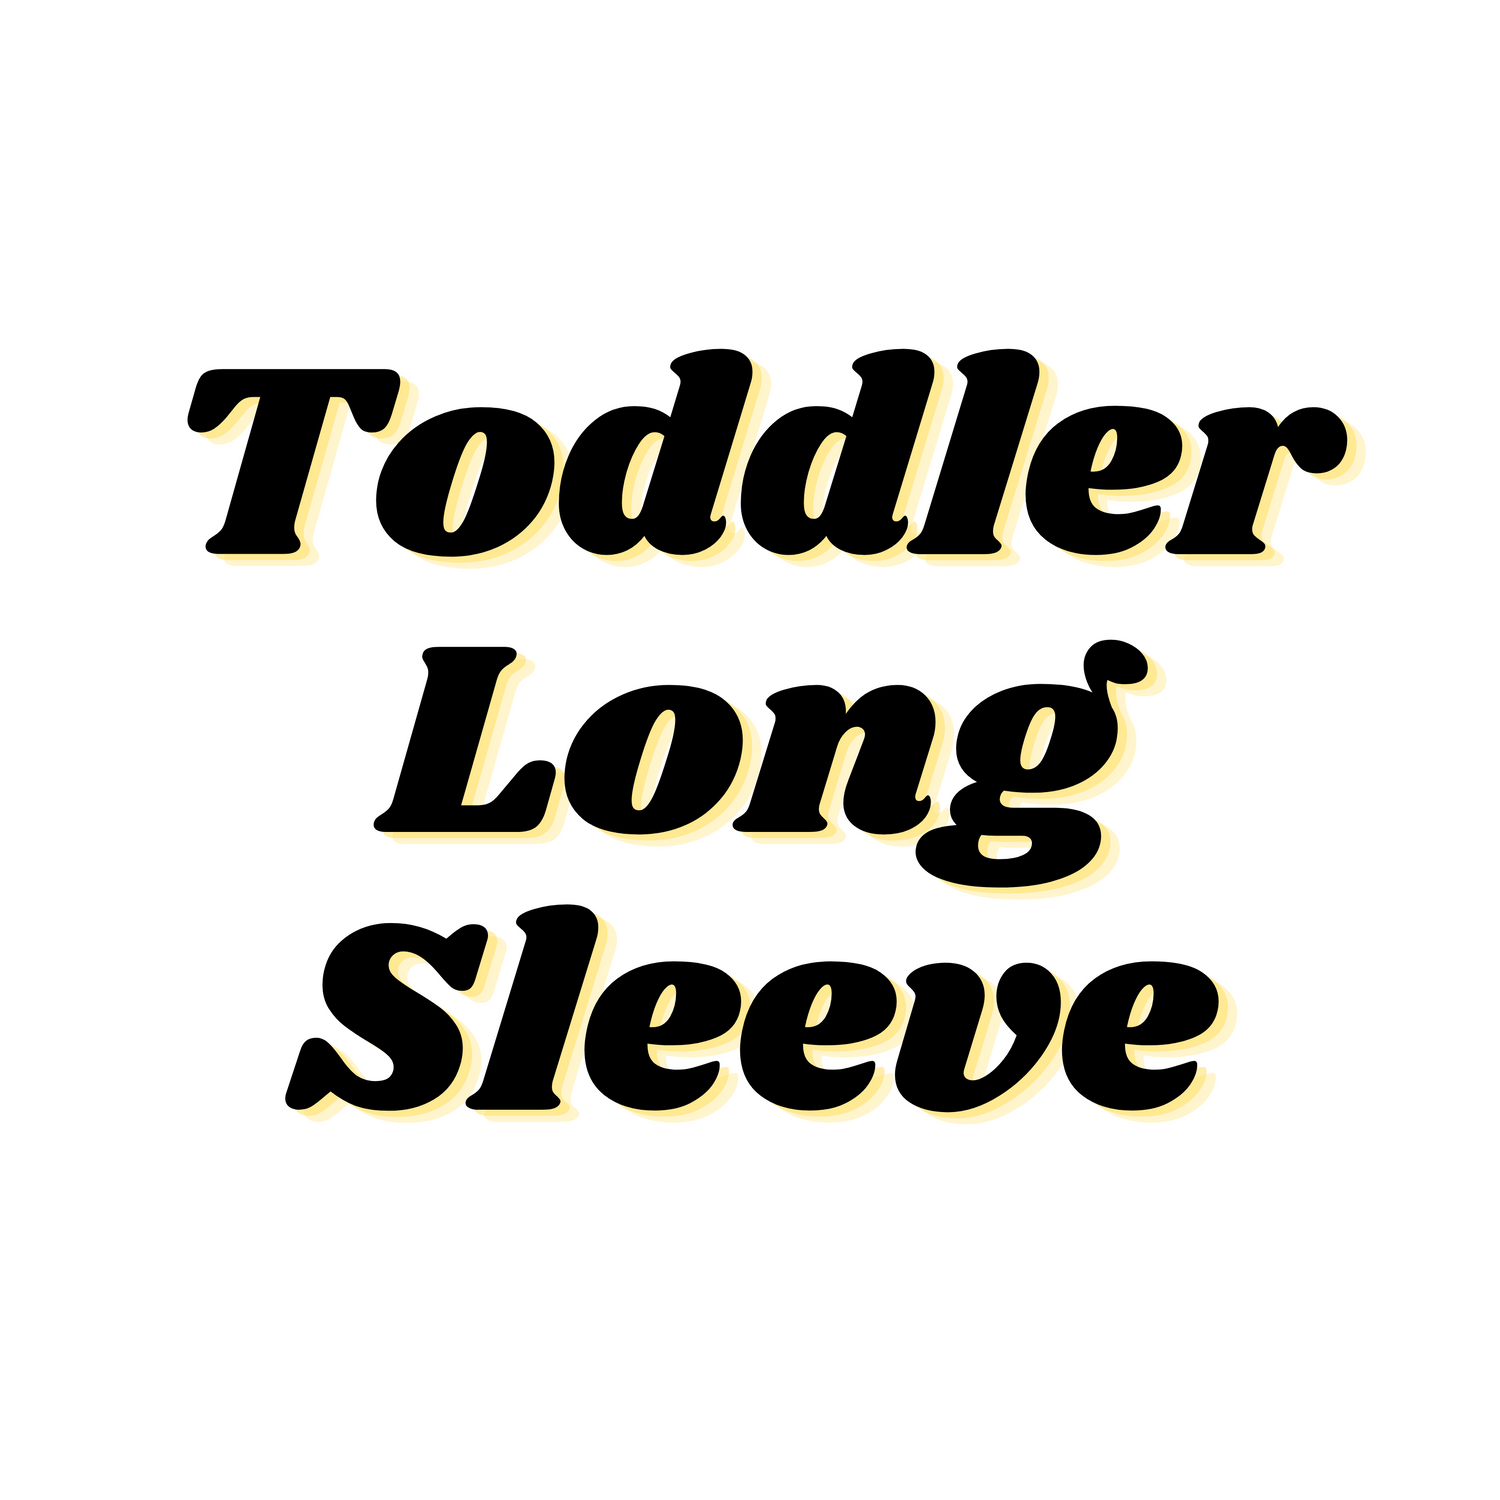 Toddler Long Sleeve